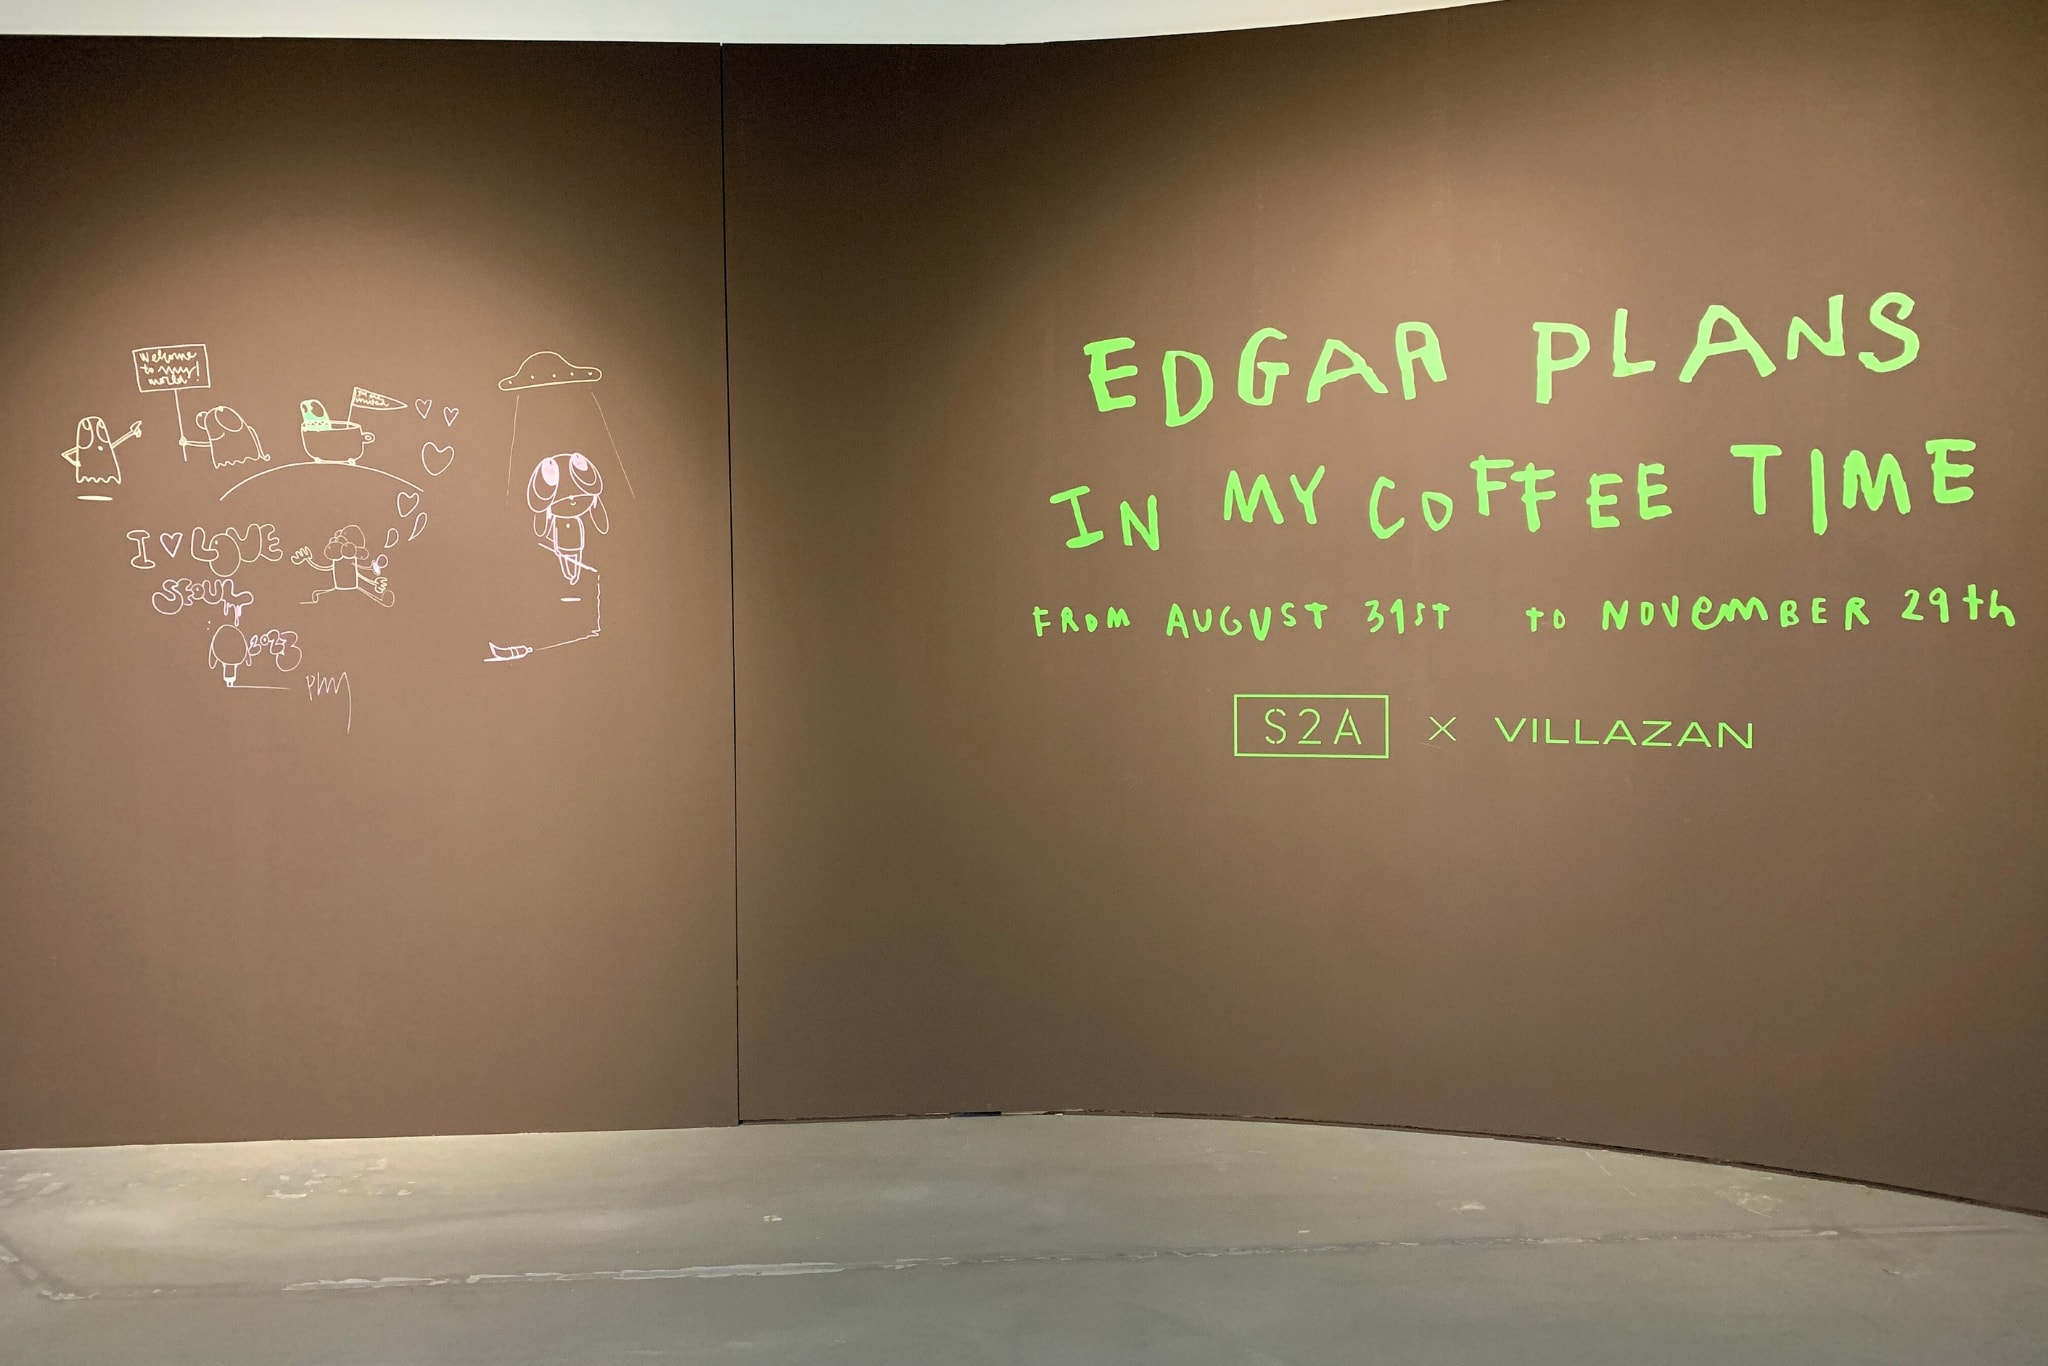 edgar plans in my coffee time exhibition pablo villazan s2a